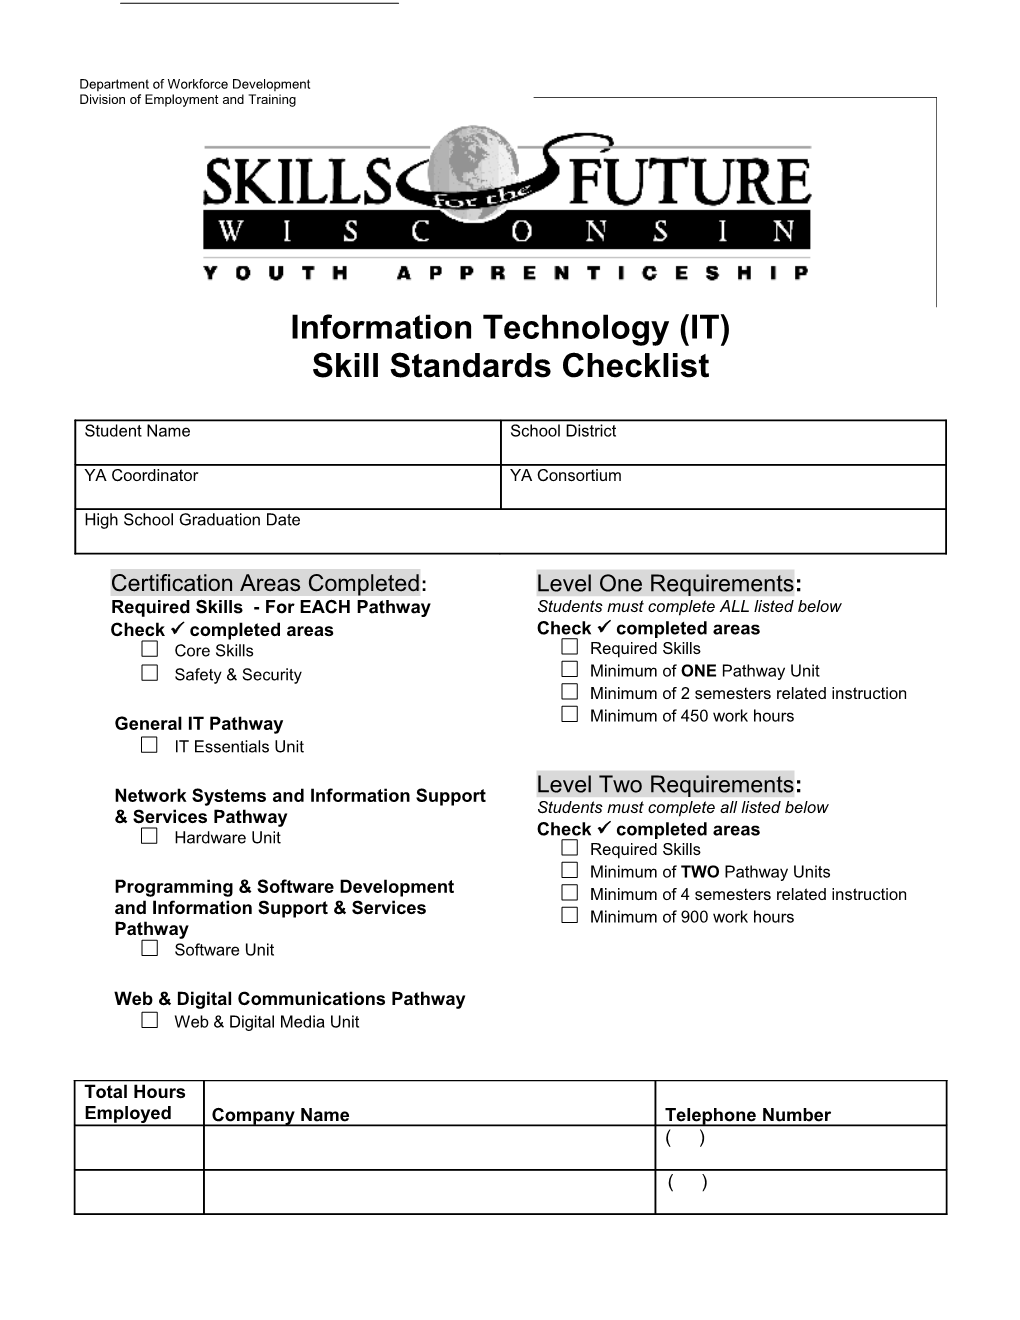 DETW-16812-E, Information Technology (IT) Skill Standards Checklist